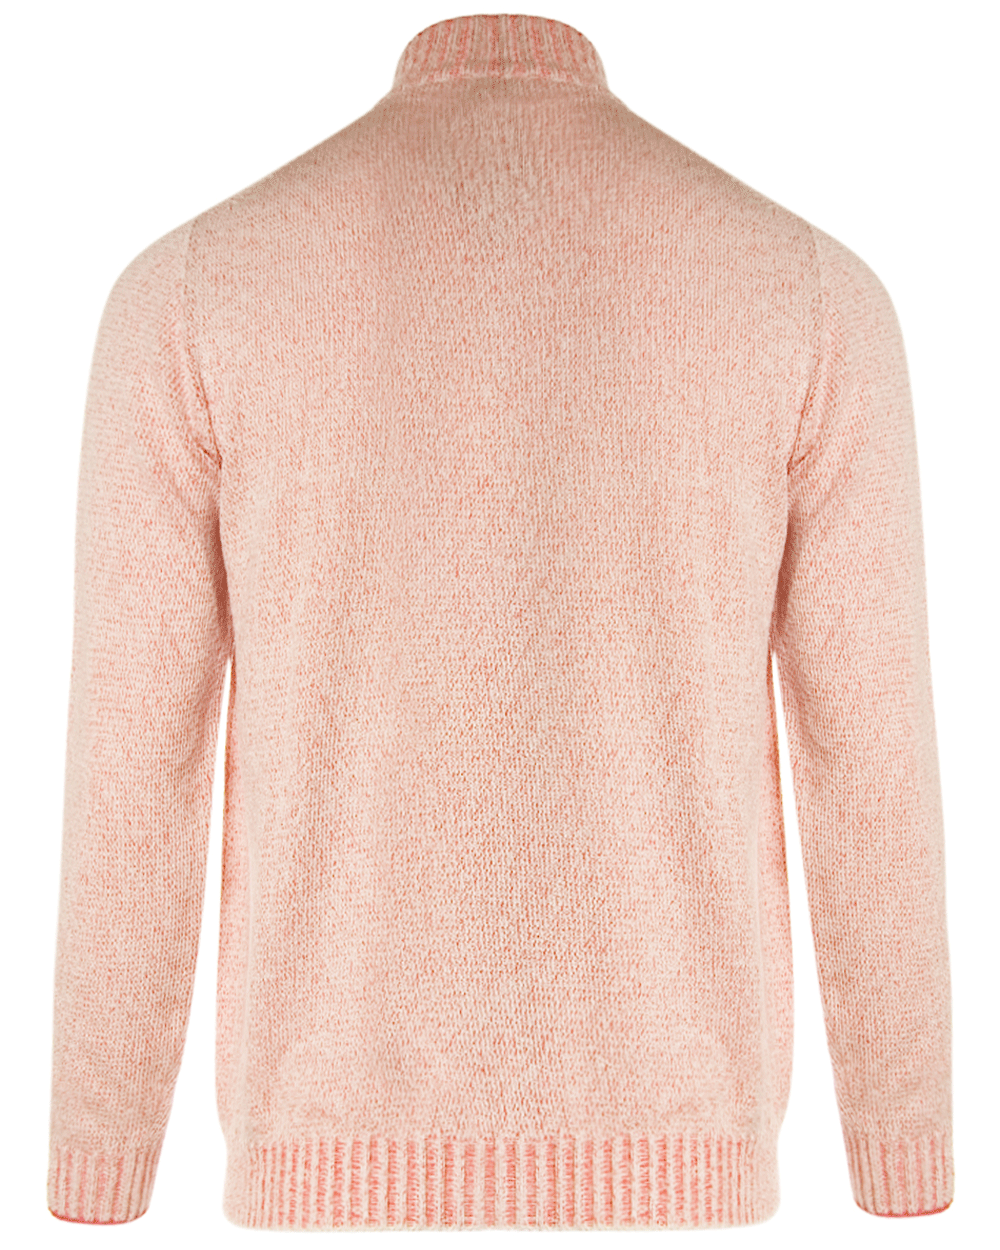 Marled Coral Vaniset Quarter Zip Sweater